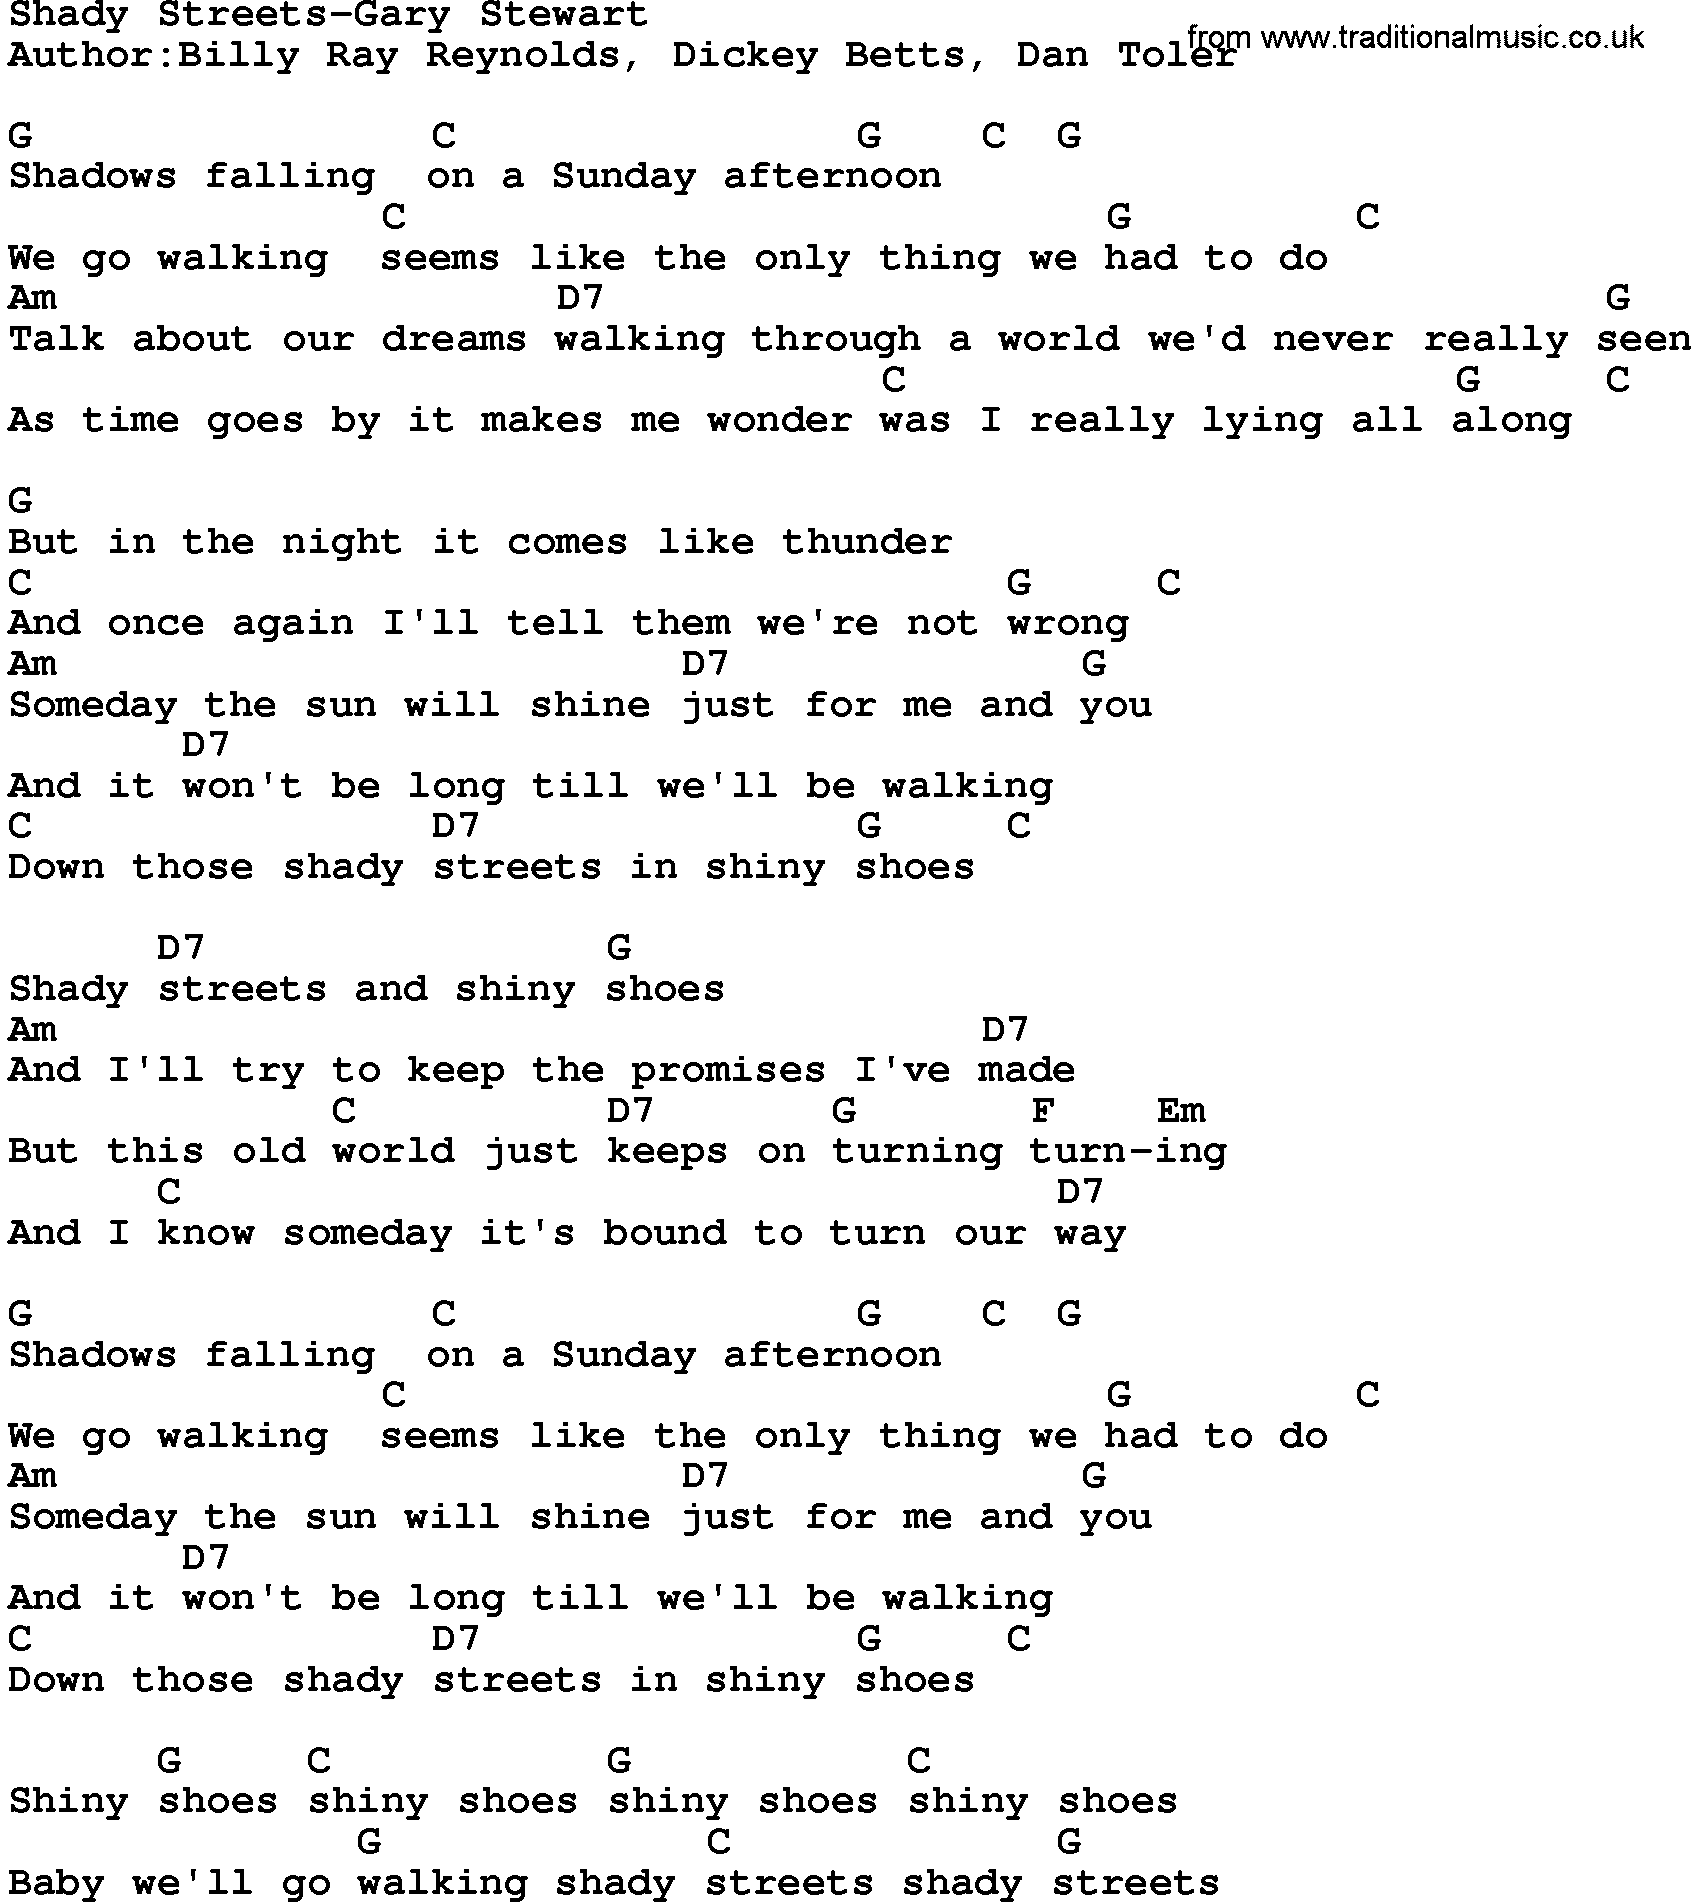 Country music song: Shady Streets-Gary Stewart lyrics and chords